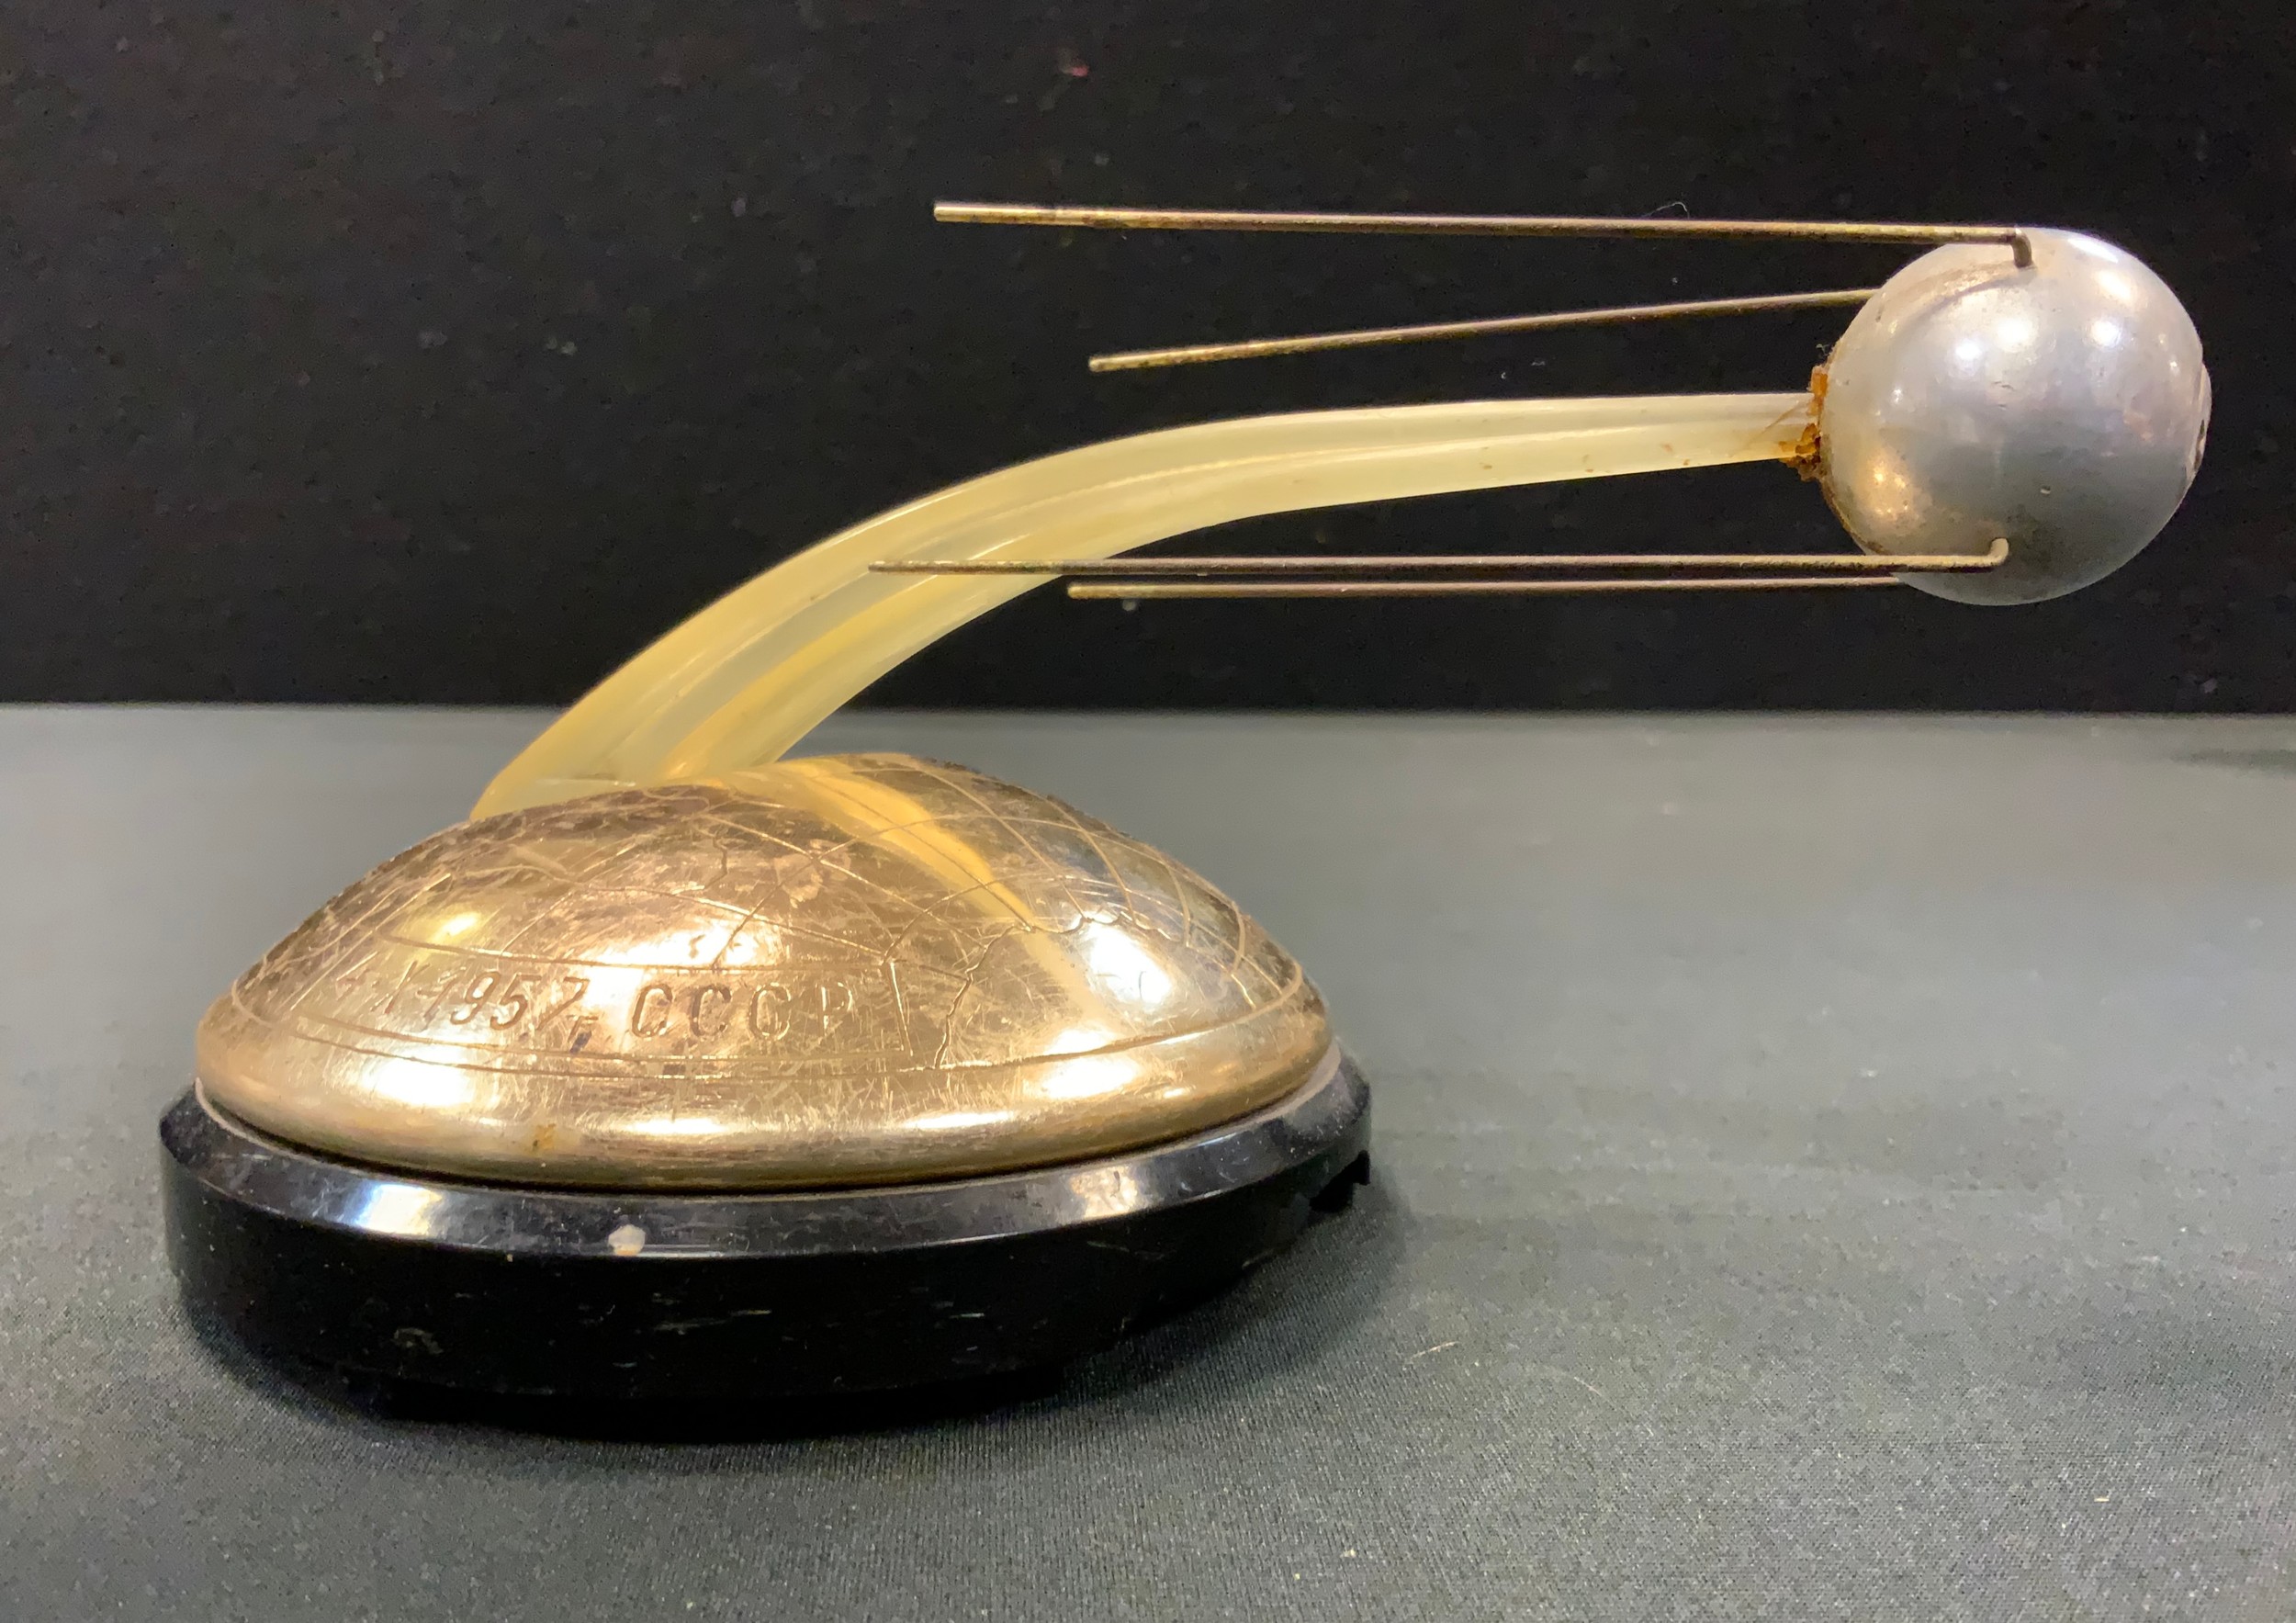 A novelty Russian clockwork musical model commemorating the Launch of Sputnik 1957